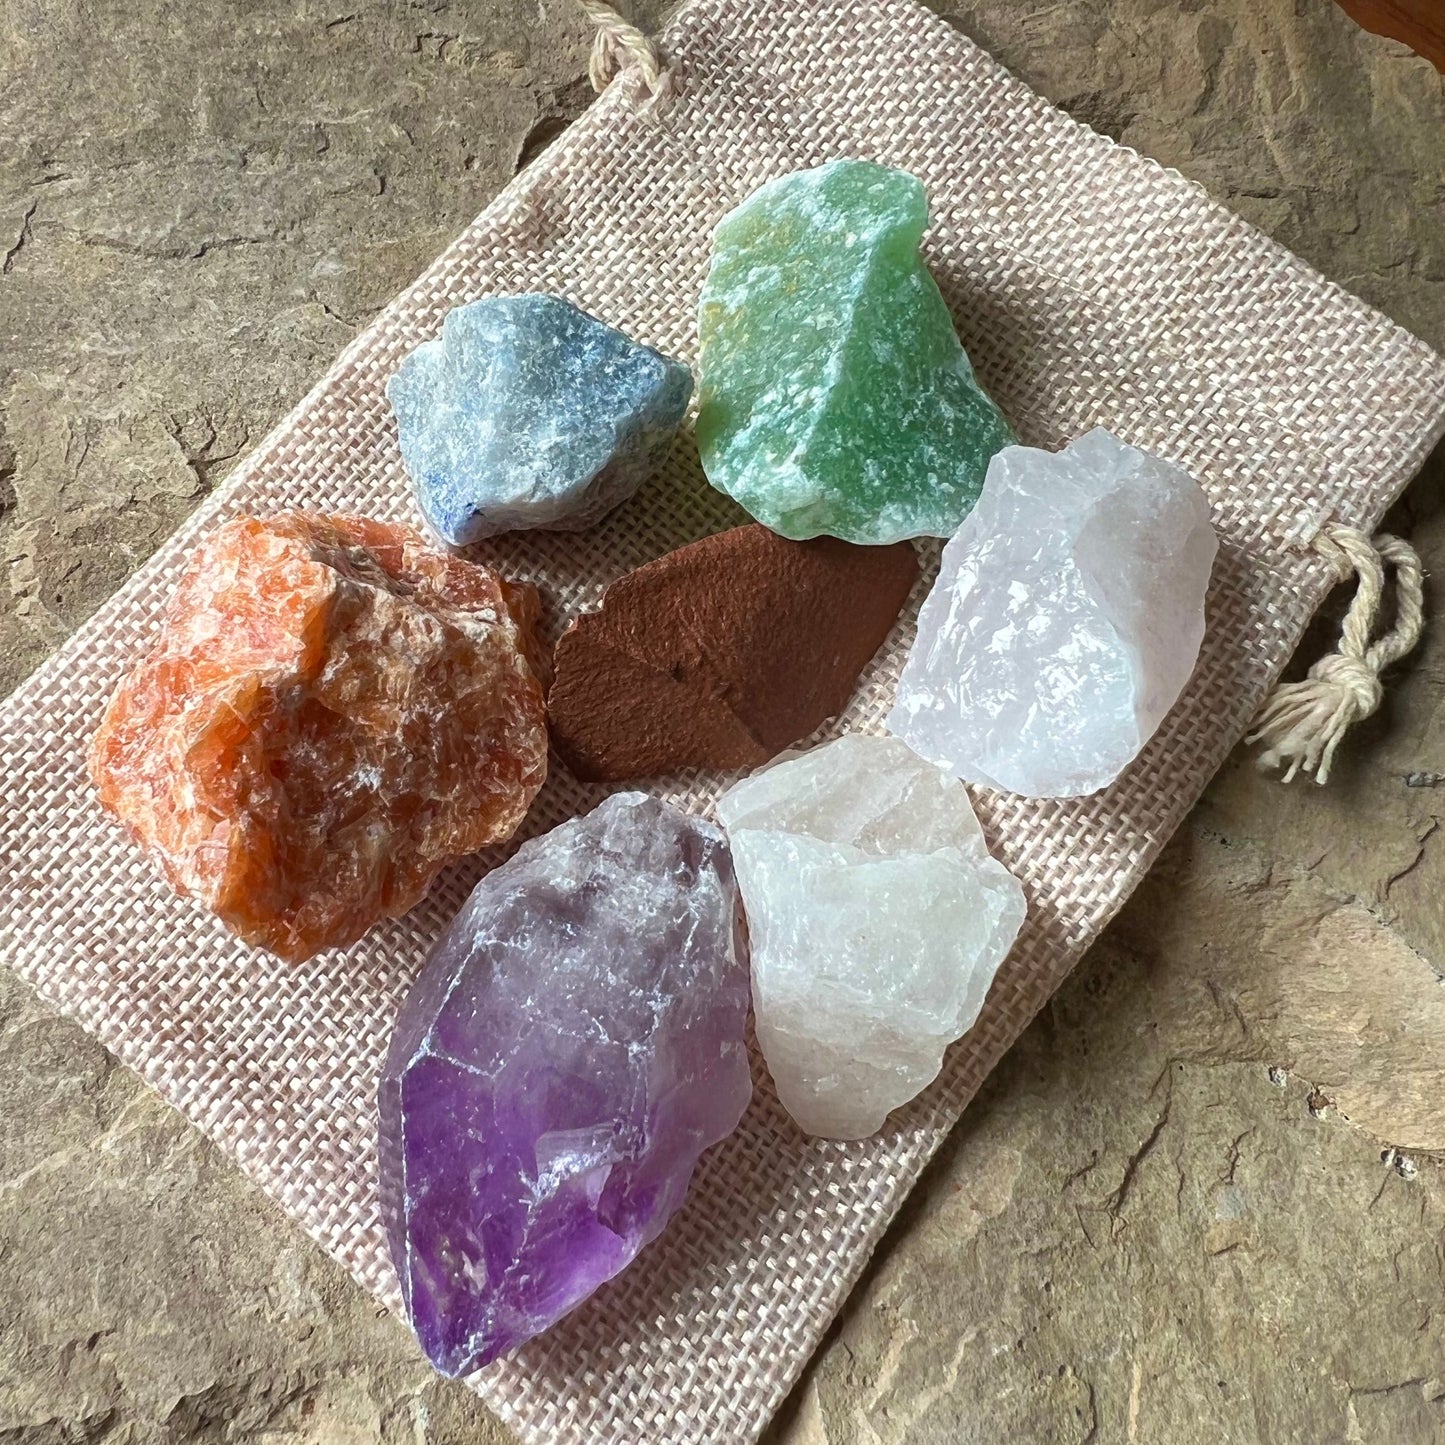 Healing Stones (Raw Crystals) in hessian Bag - Spirit & Stone